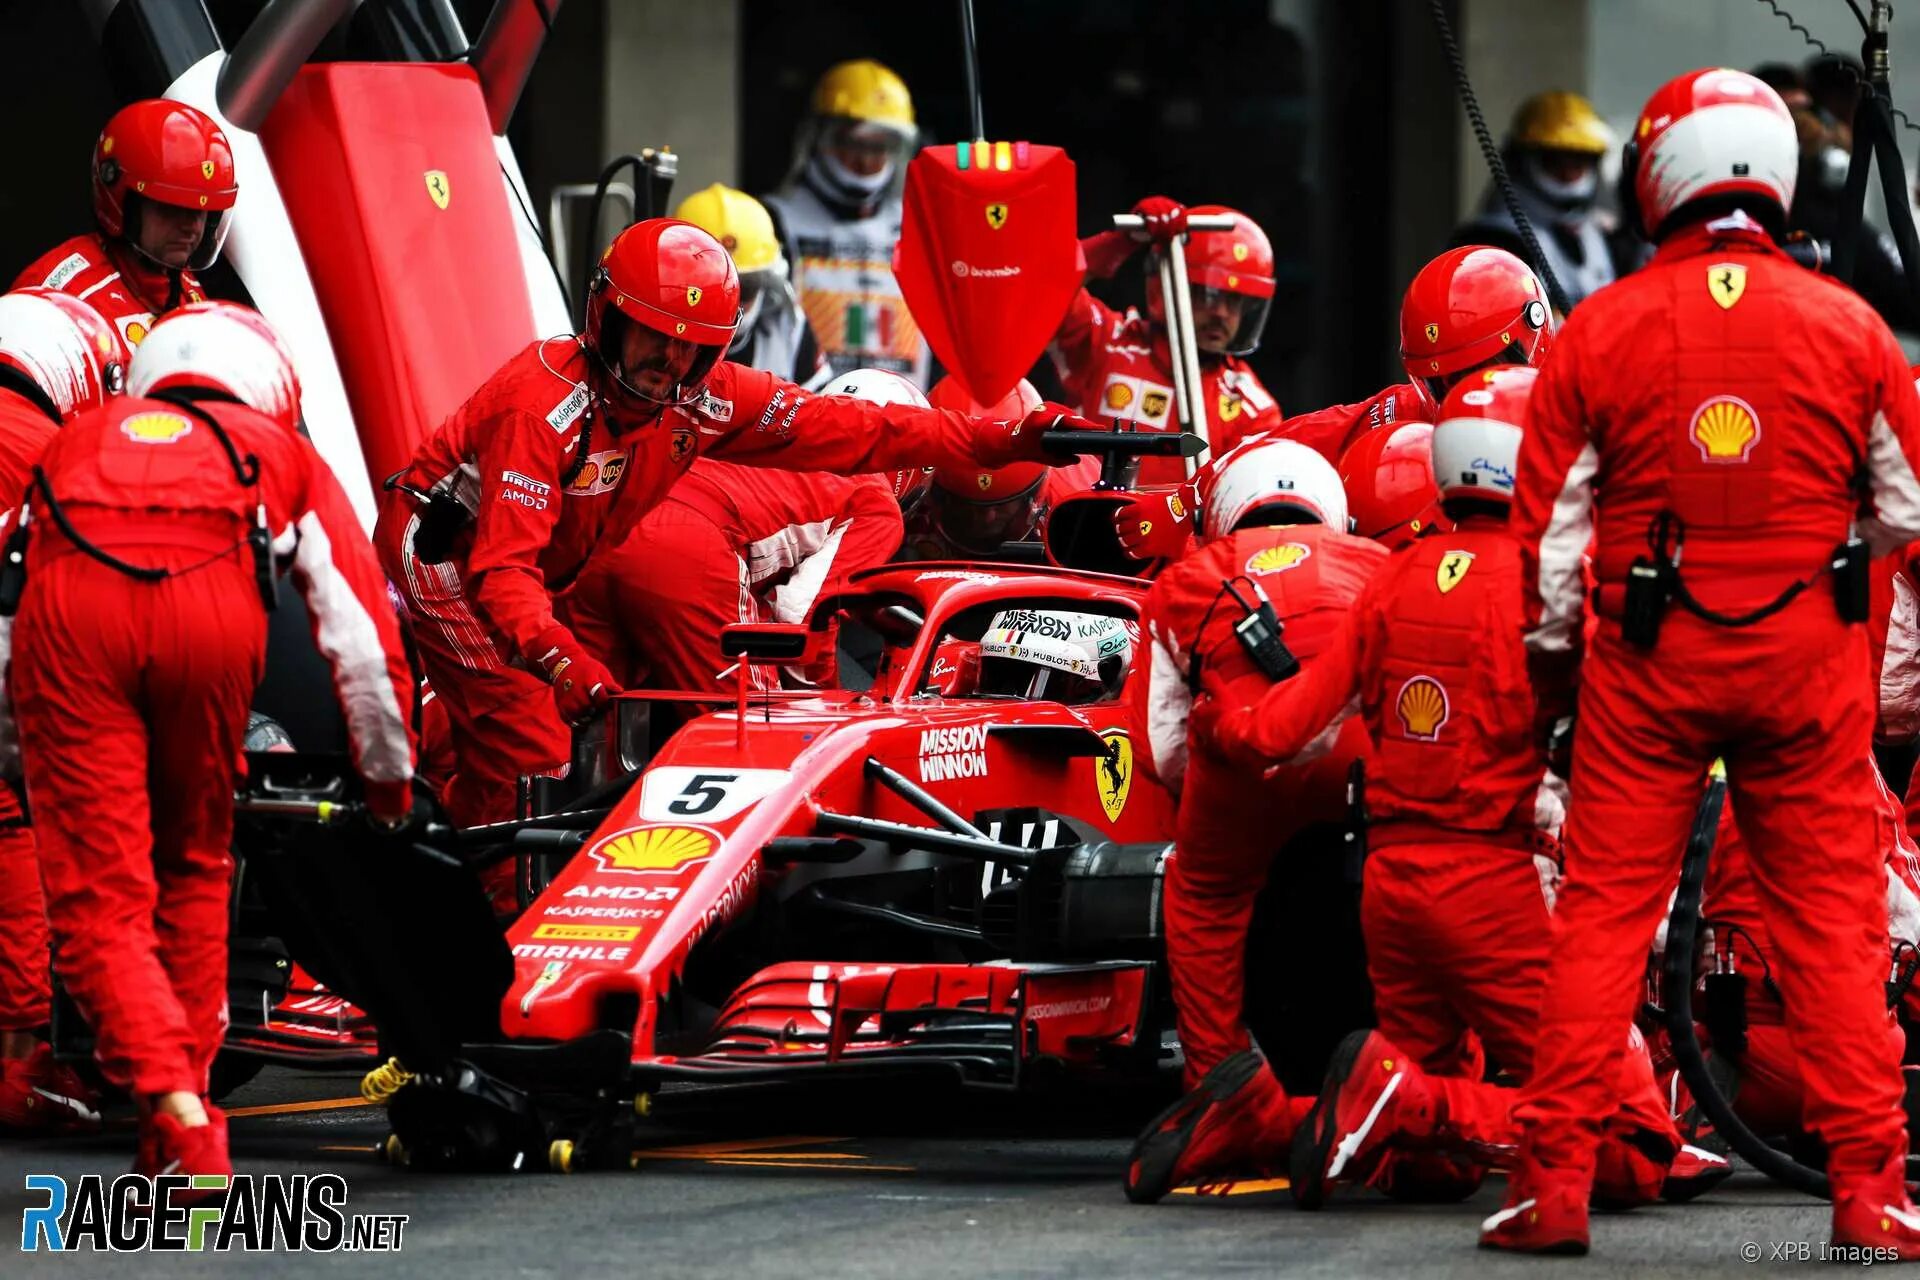 Формула 1 50. Ferrari f1 пит стоп. Пит стоп Formula 1. Команда формула 1 Феррари пит стоп. Феррари (команда «формулы-1»).